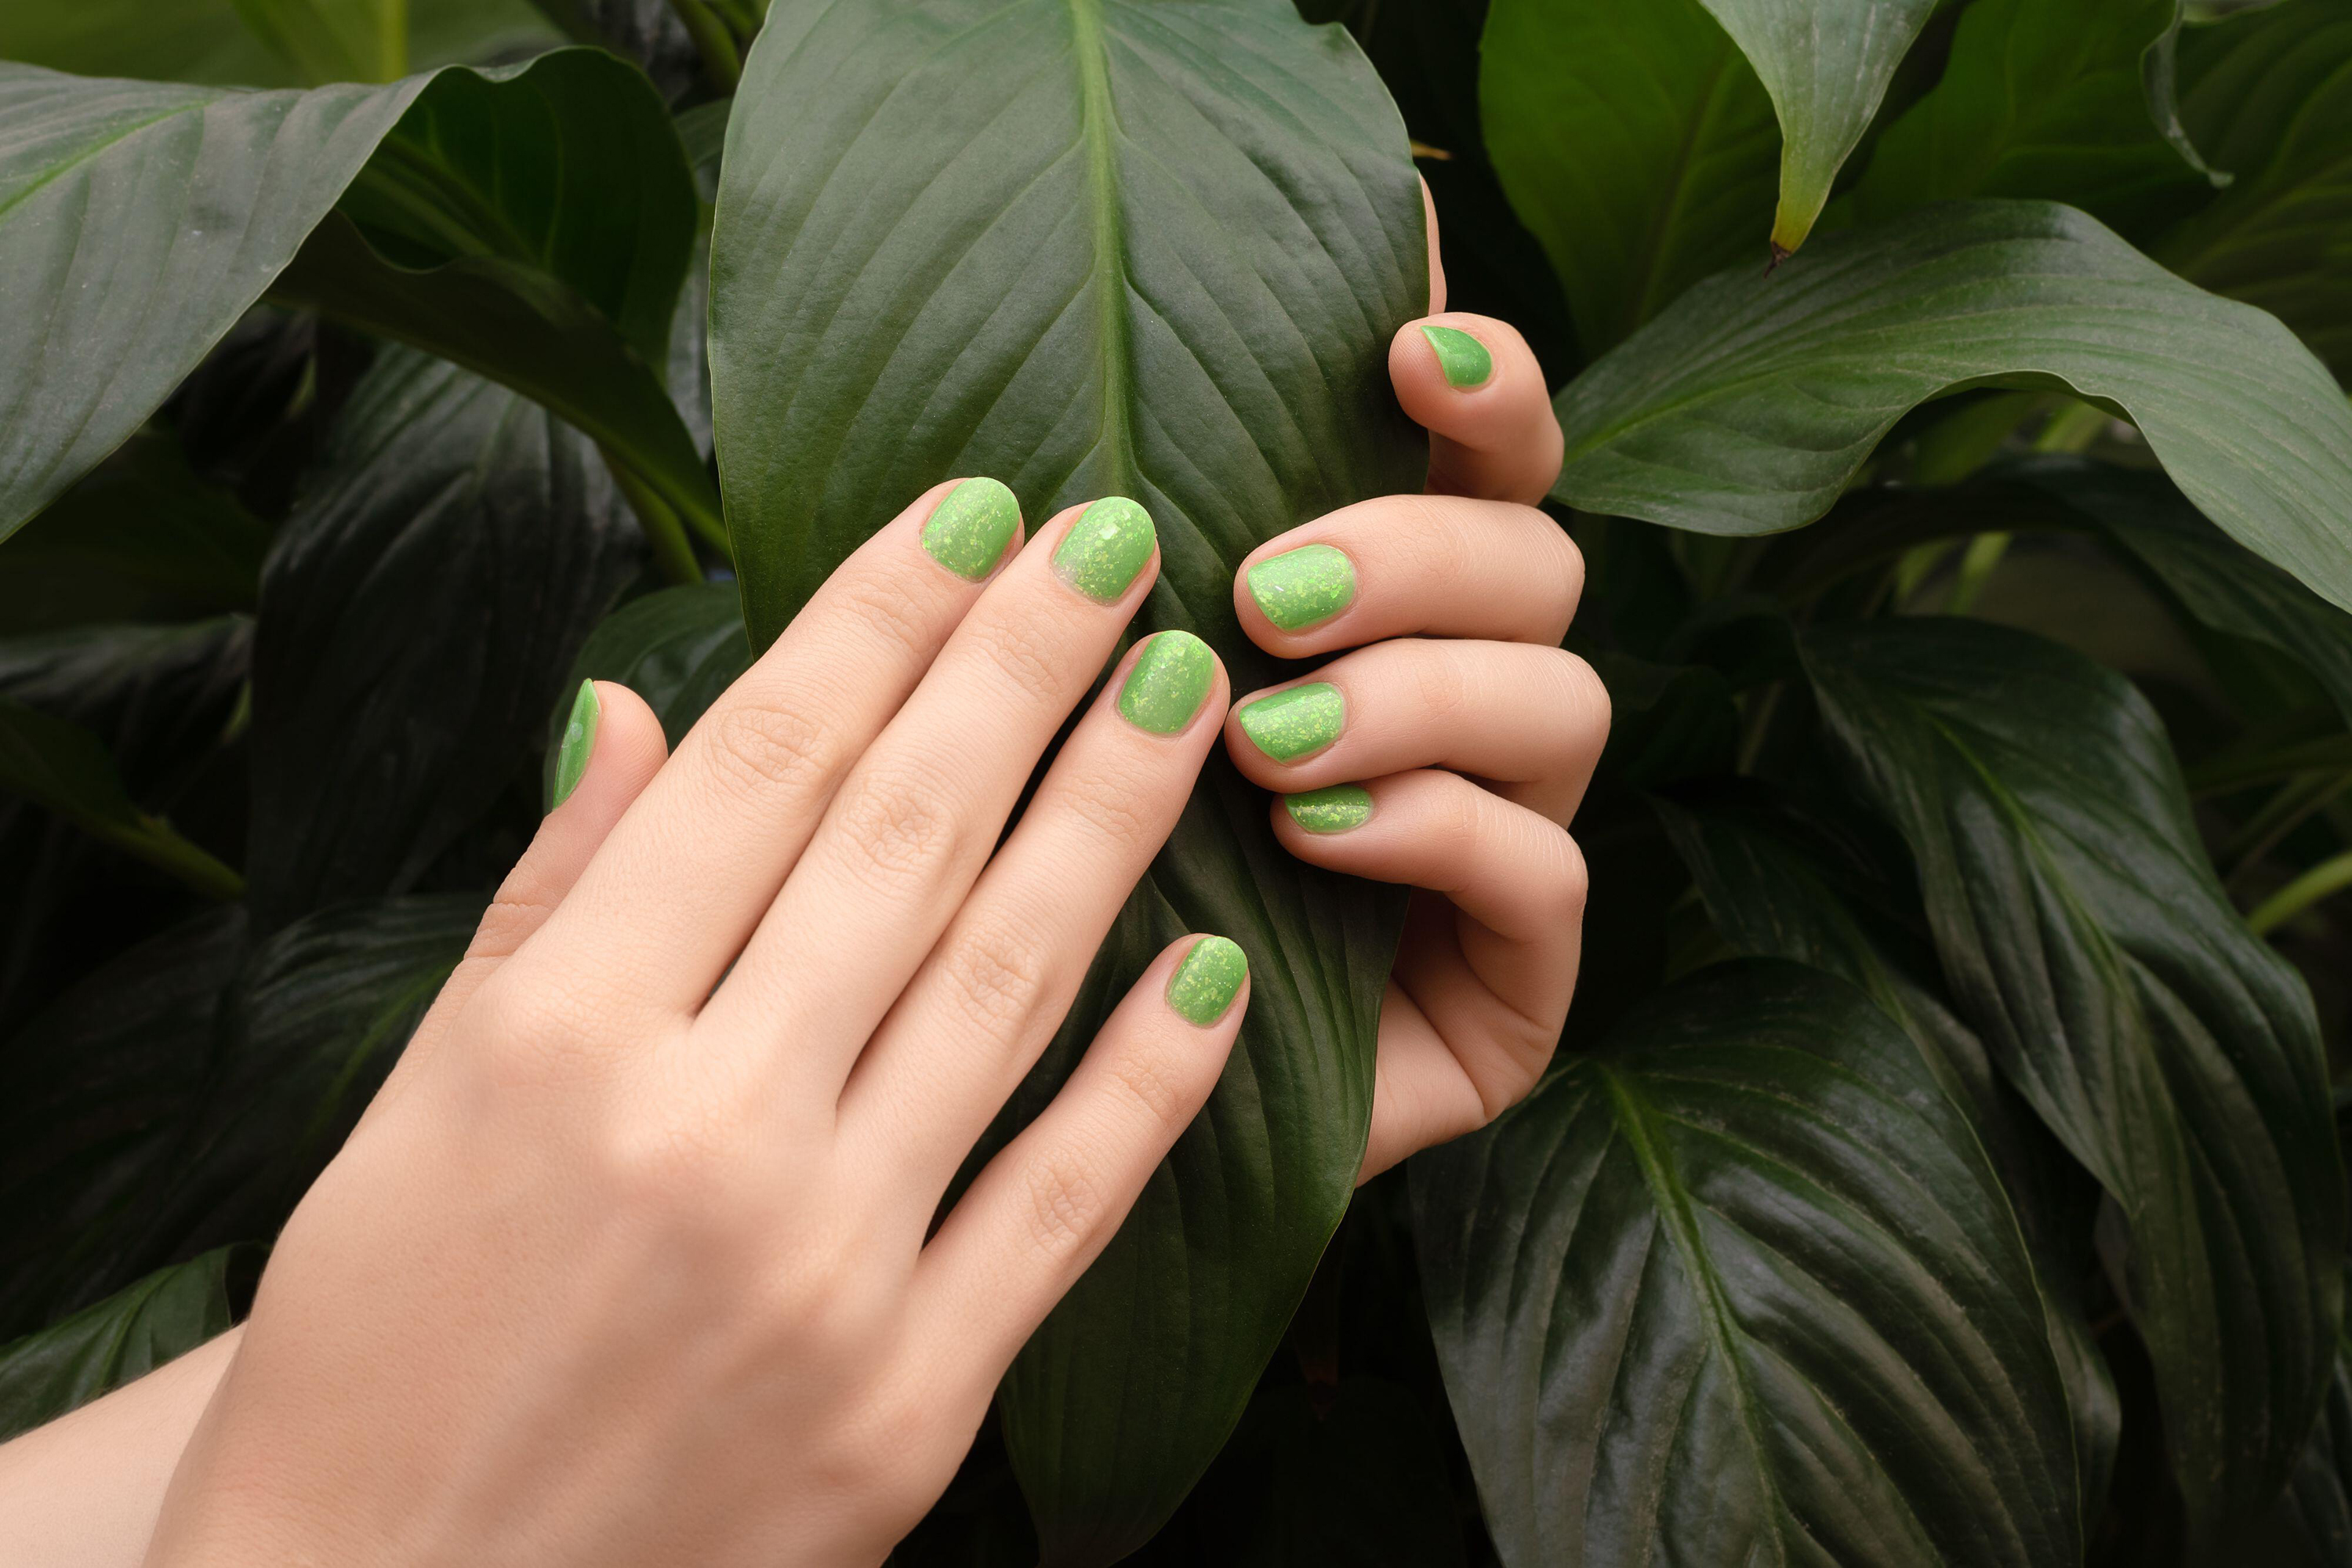 Nails with green polish